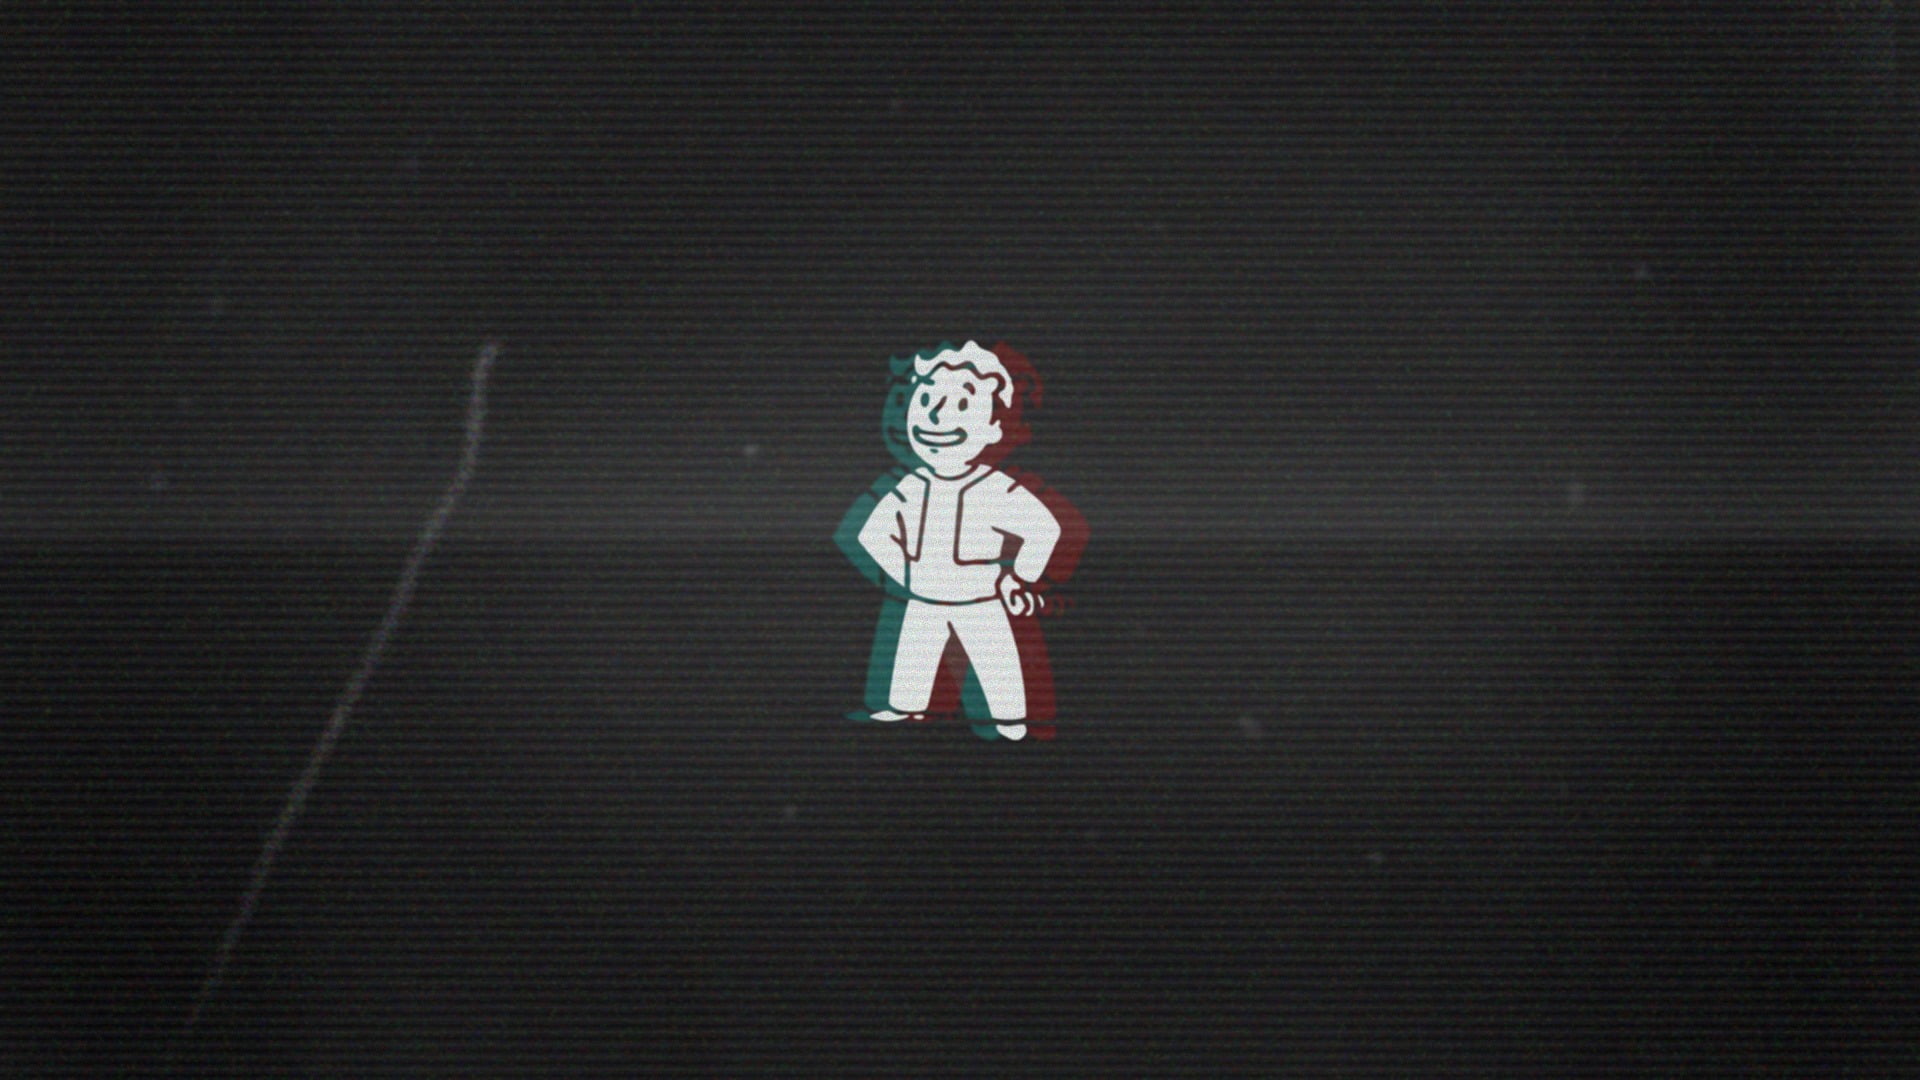 standing man illustration, Fallout 3, Pip-Boy, video games, creativity